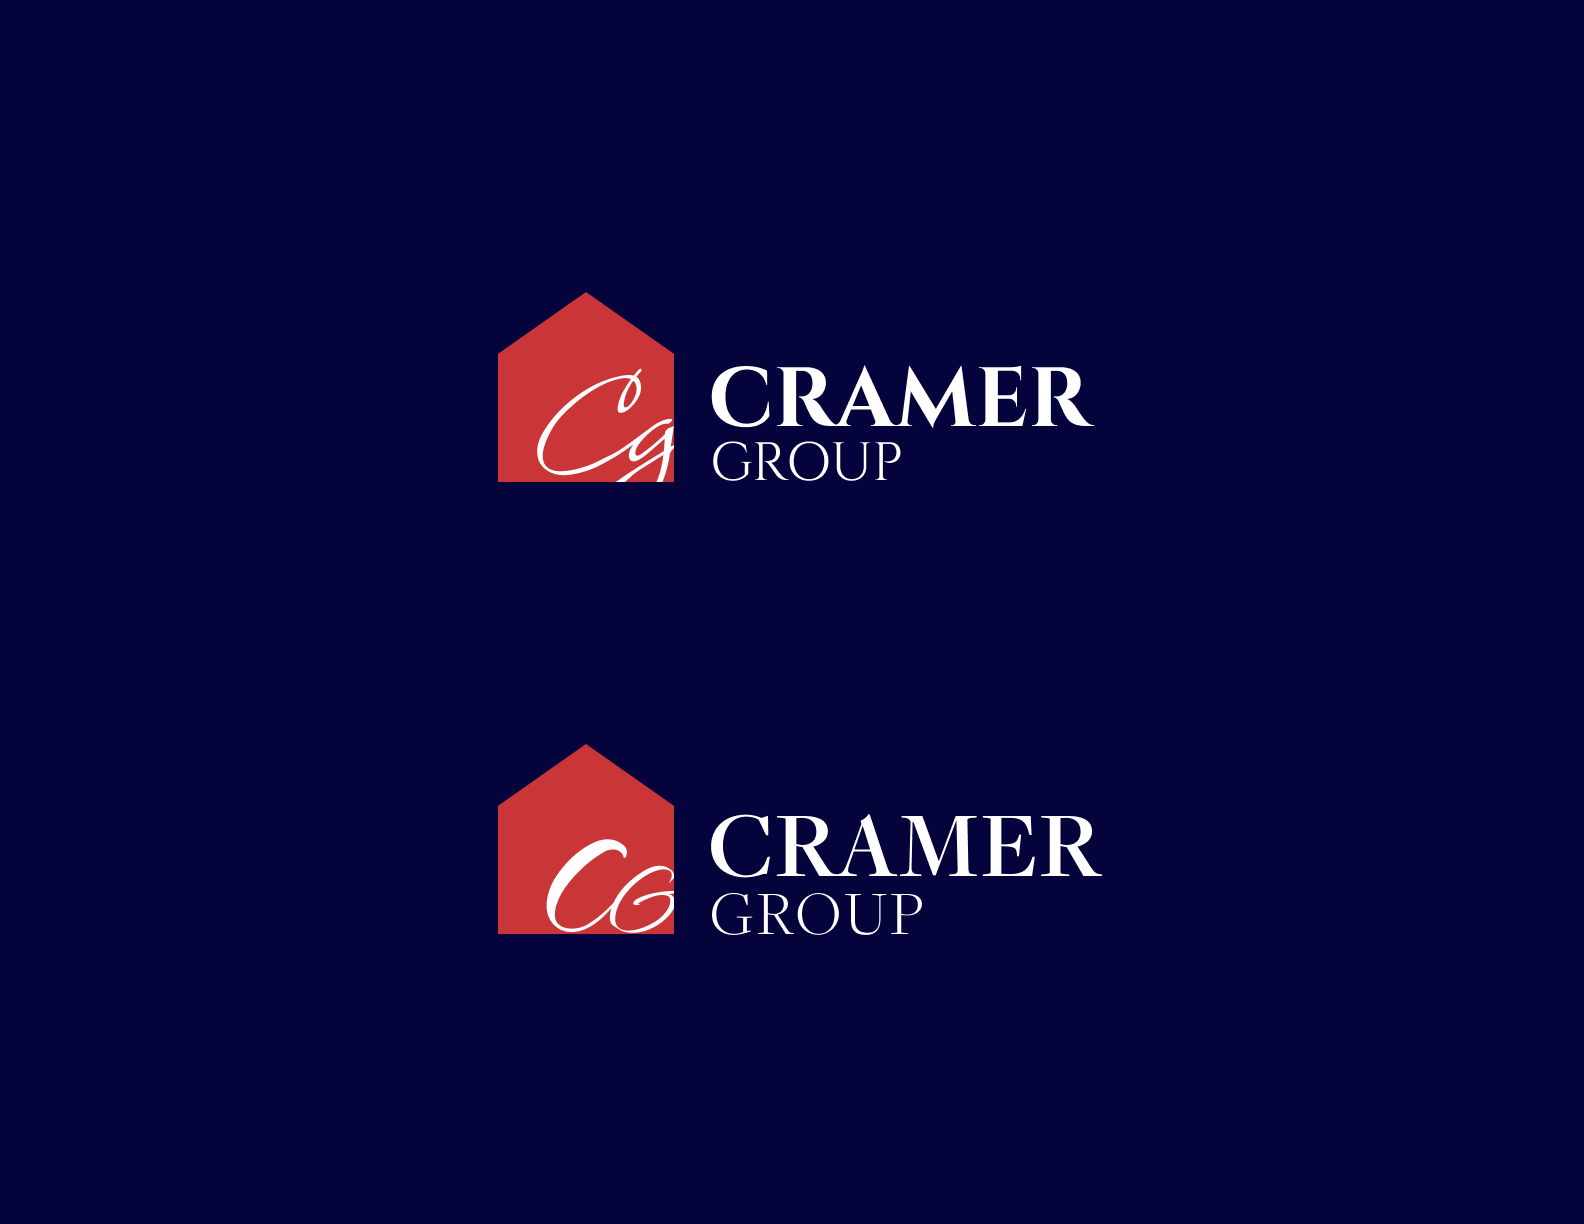 Cramer Group logo explorations